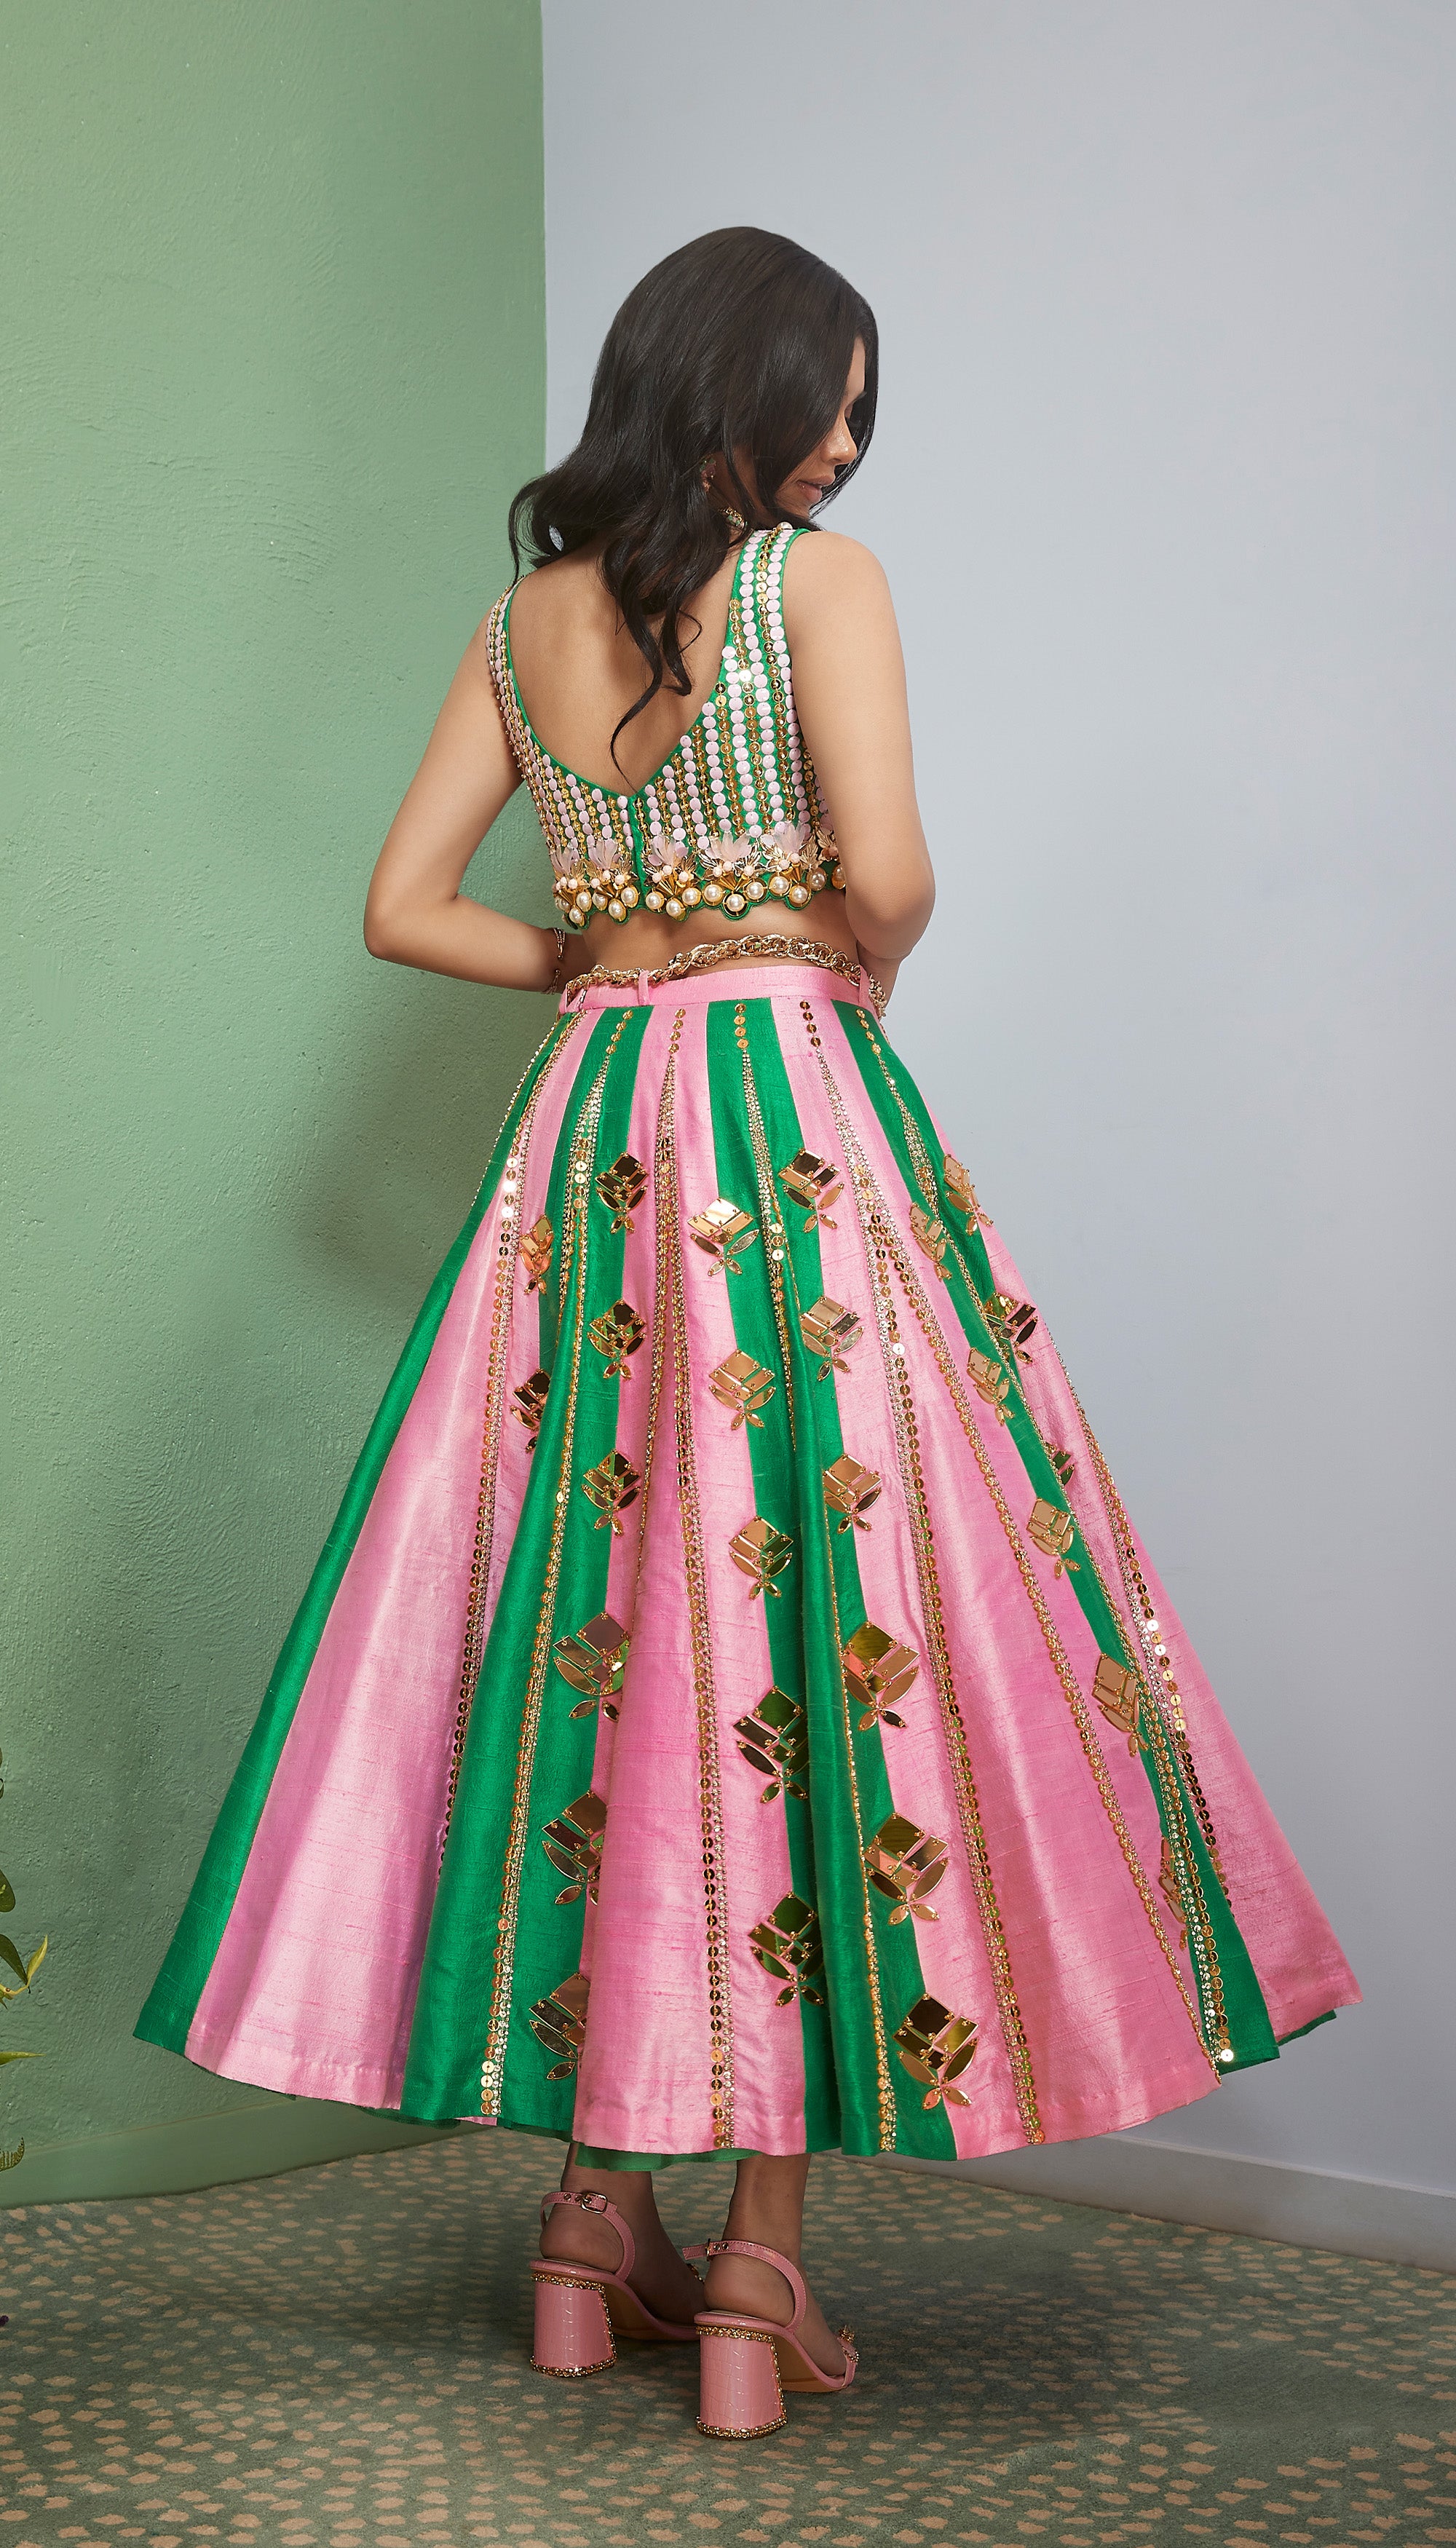 Velvet Lehenga with Gold Embellishment and Bustier – Tanisha Vaidya